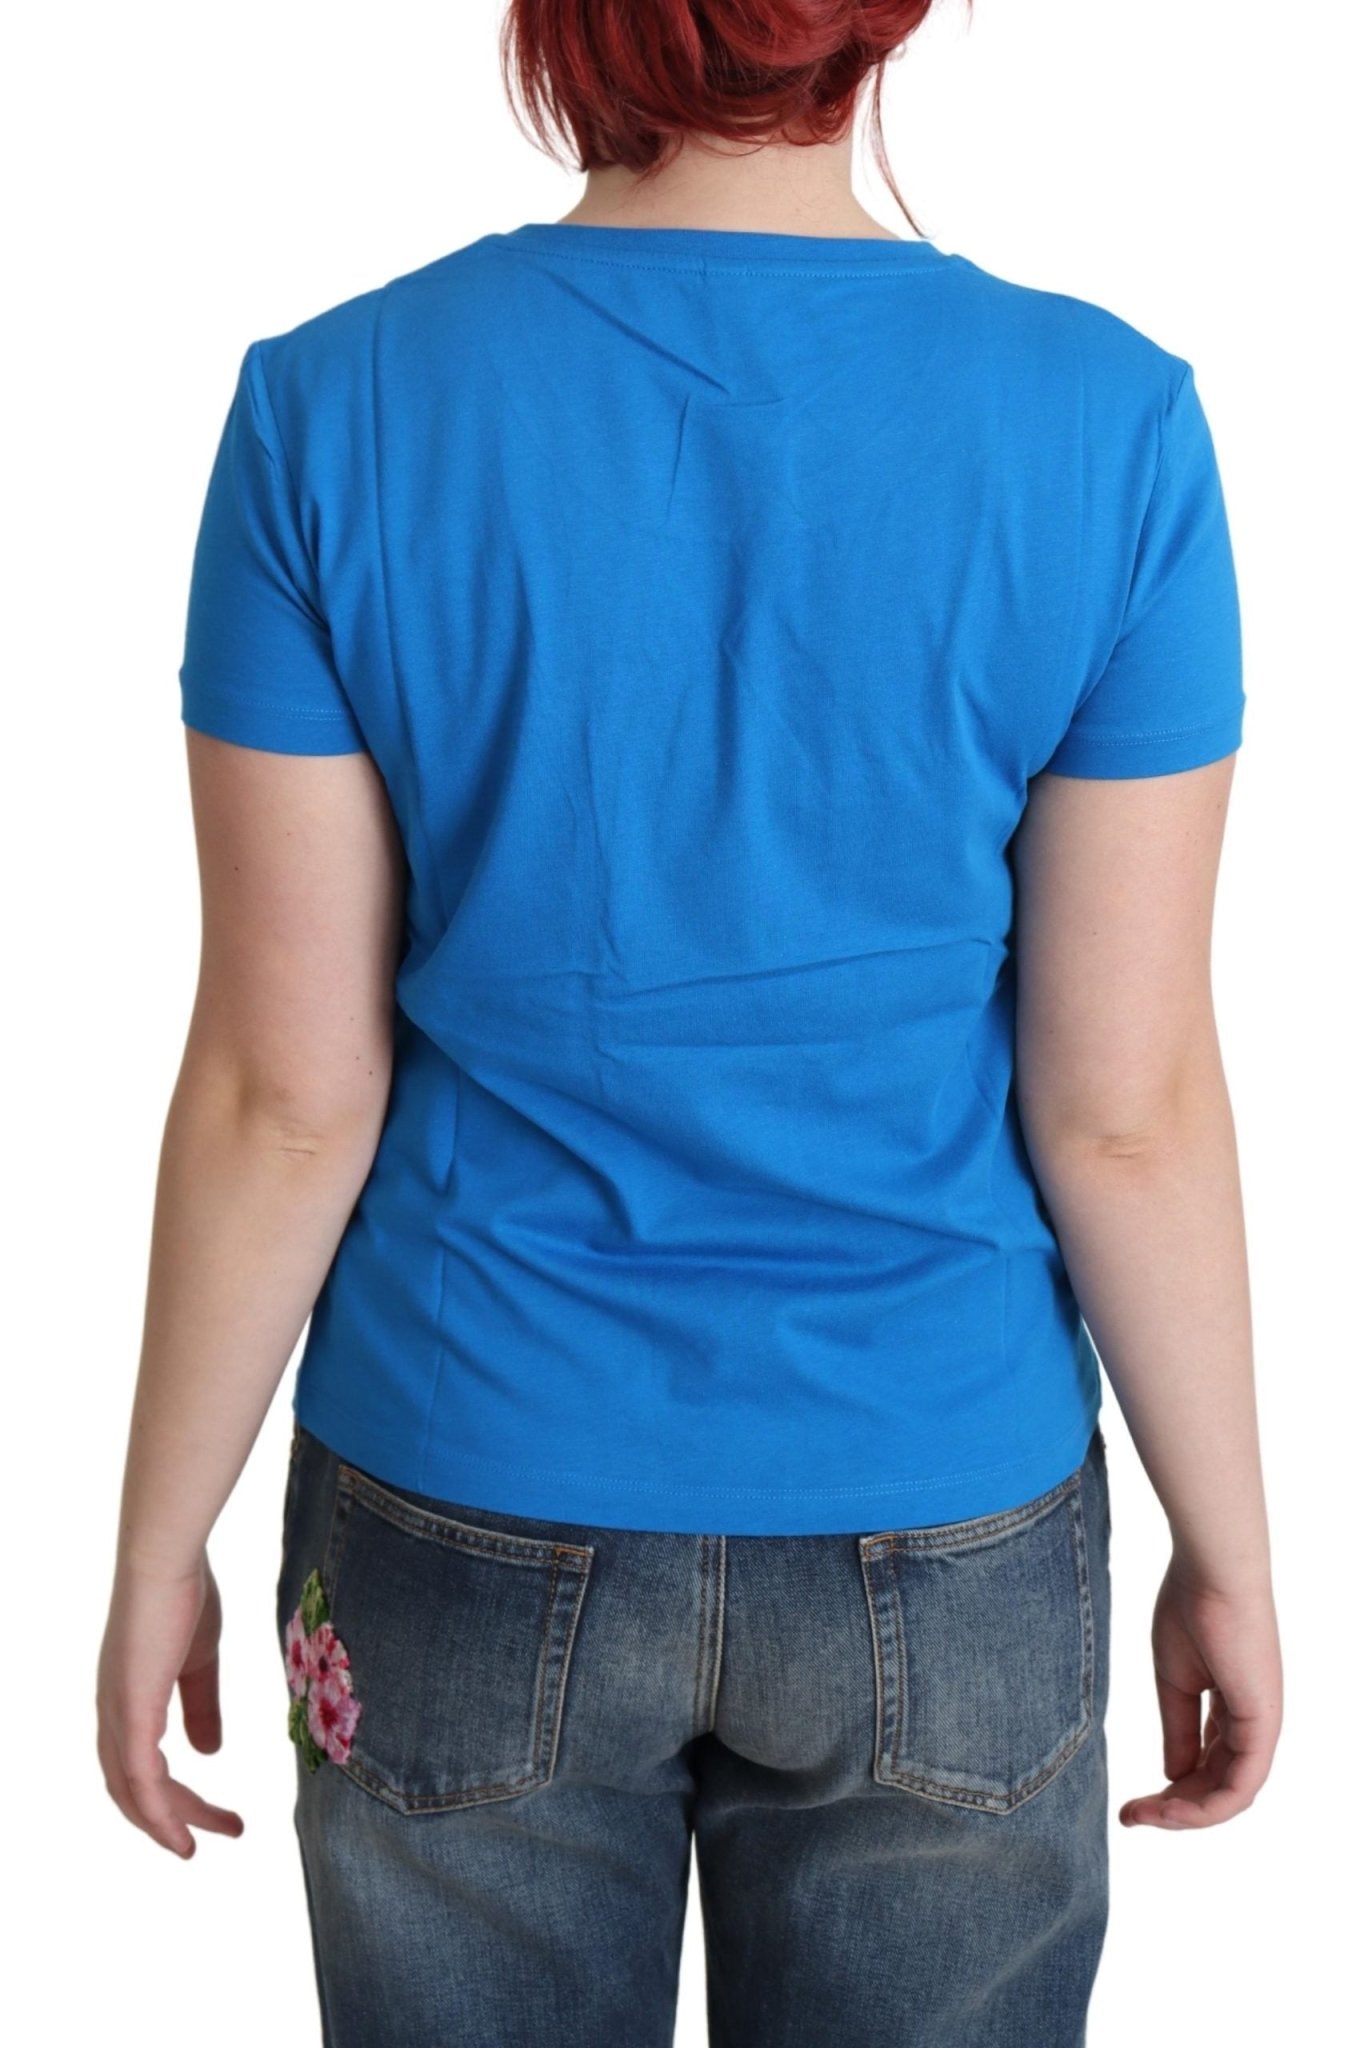 Moschino Blue Printed Cotton Short Sleeves Tops T-shirt - Fizigo